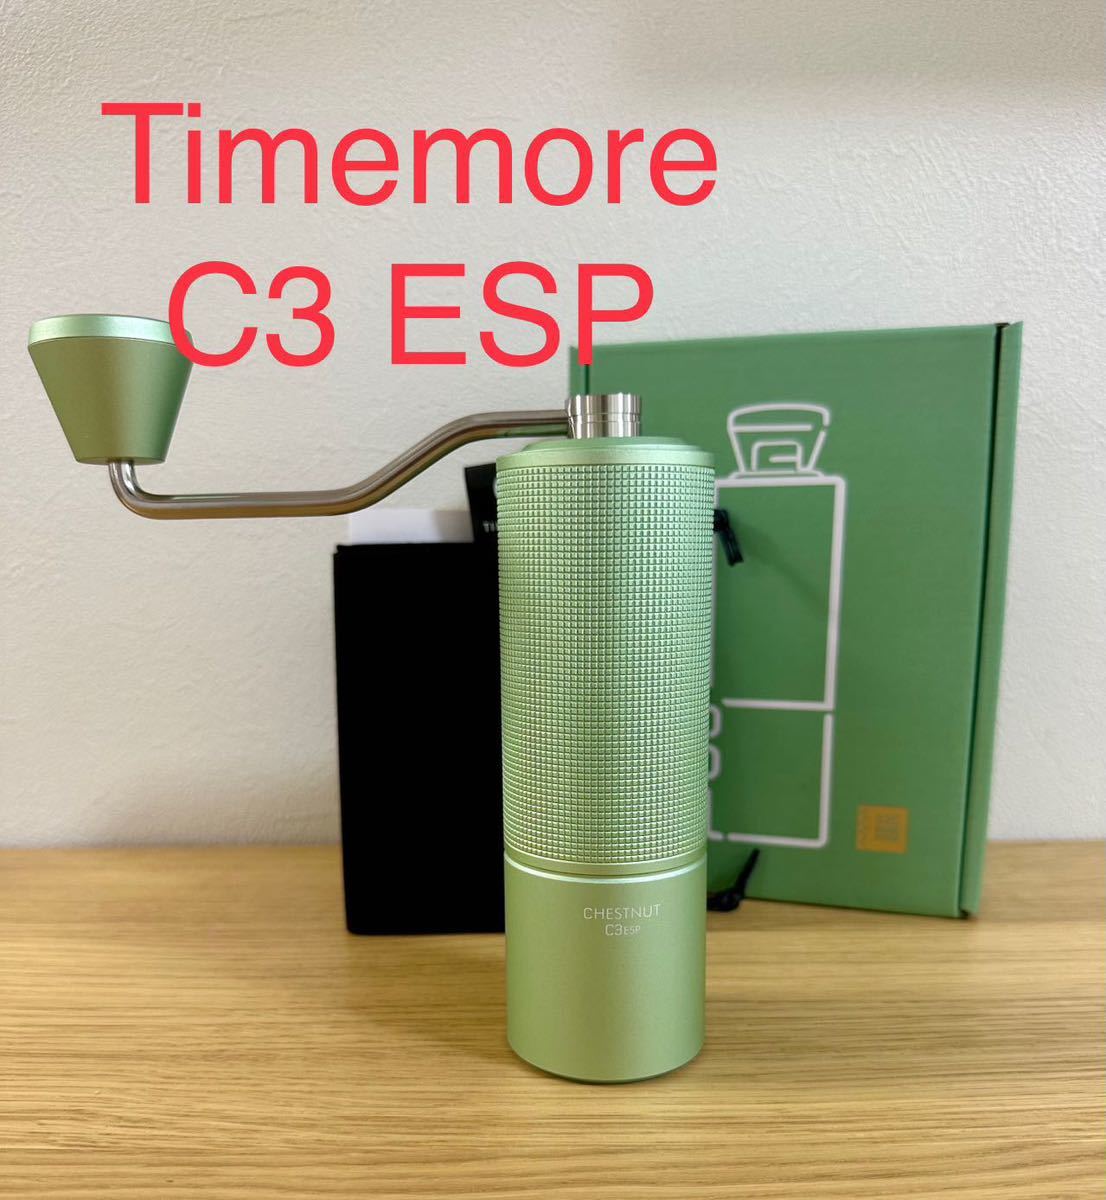 Timemore Time больше эспрессо -только нового продукта! Kuriko C3ESP Coffee Mill Green Grinder Parallel Import Goods